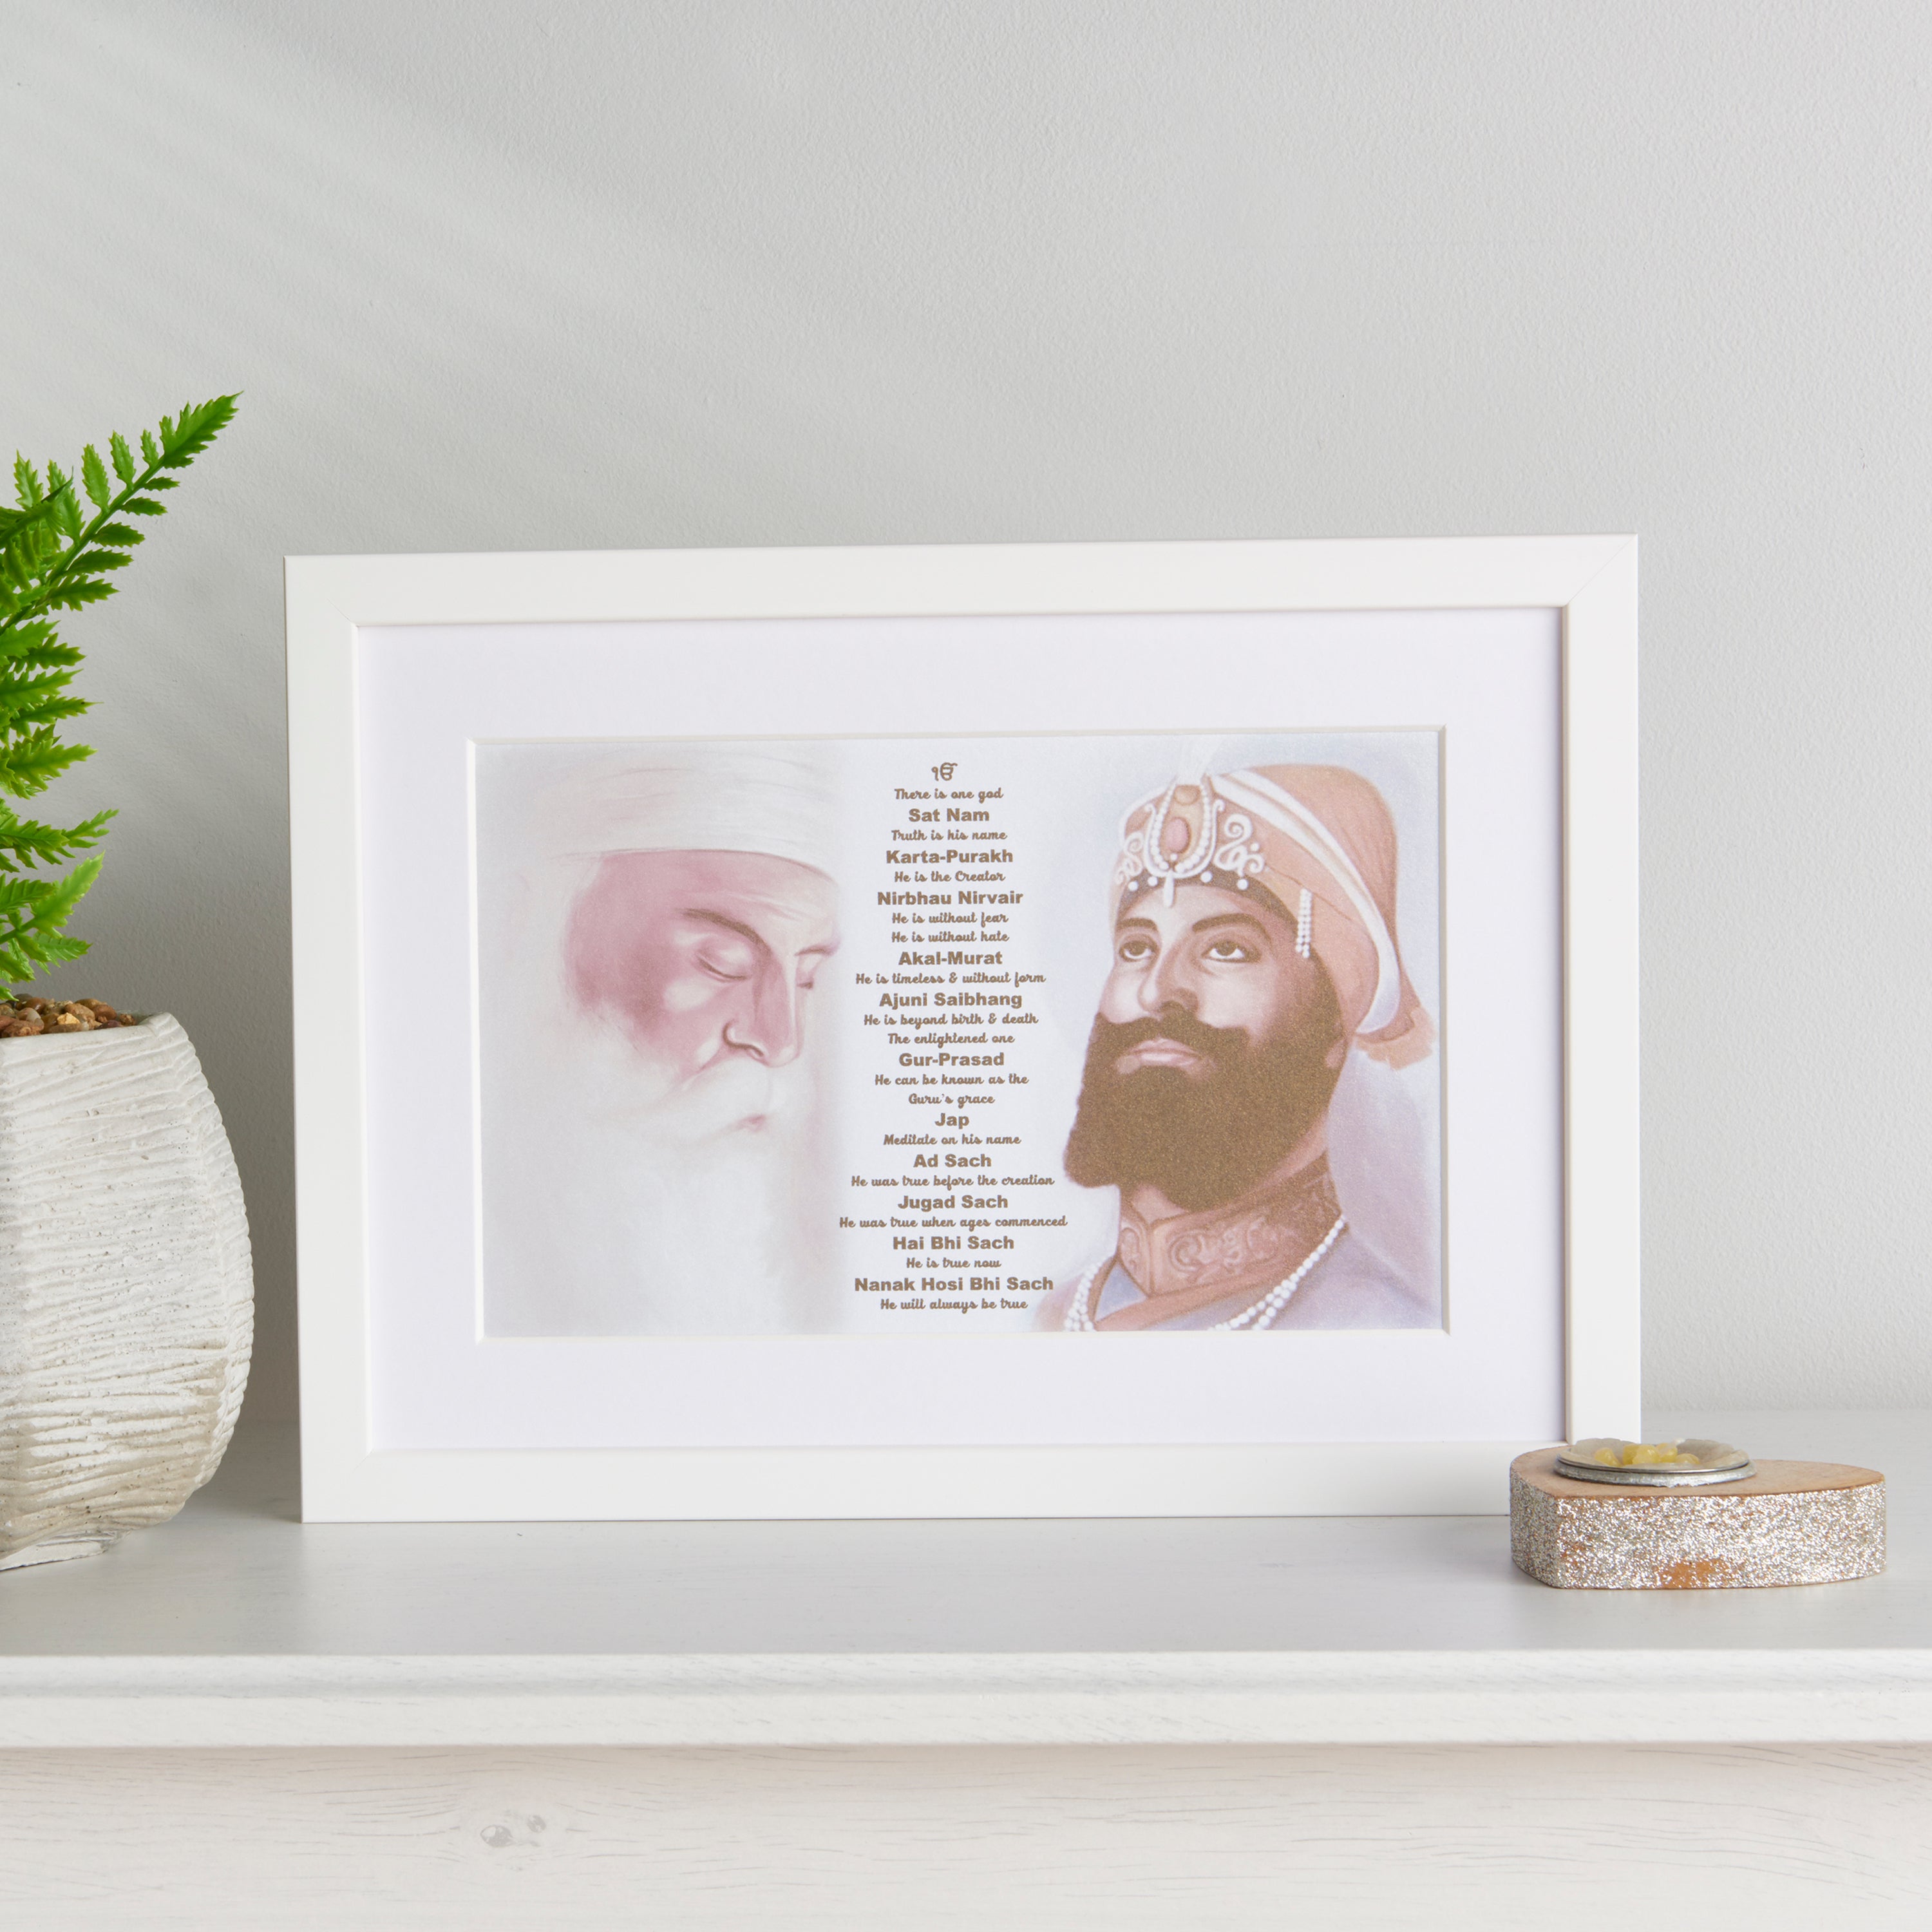 Guru Nanak & Guru Gobind Print Including Mool Mantar in English Including Translation